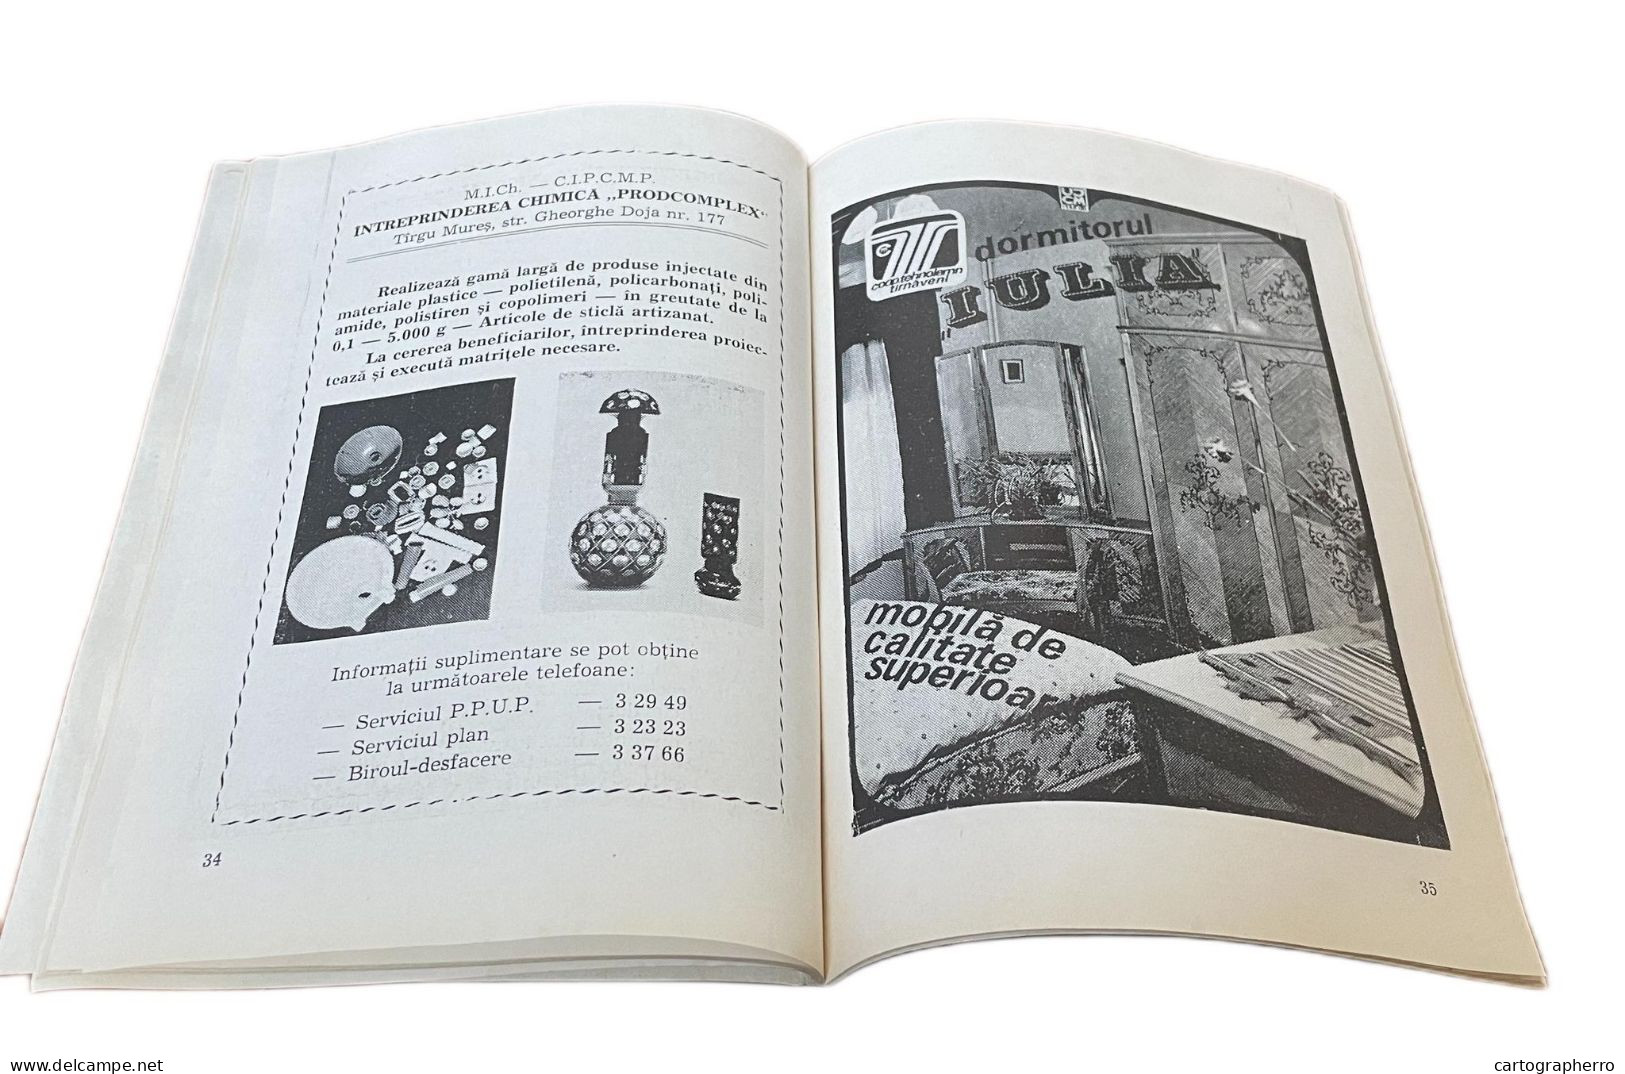 Romania expozitia filatelica omagiala catalog 1980 asociatia filatelistilor filiala Mures cerc filatelic Sighisoara